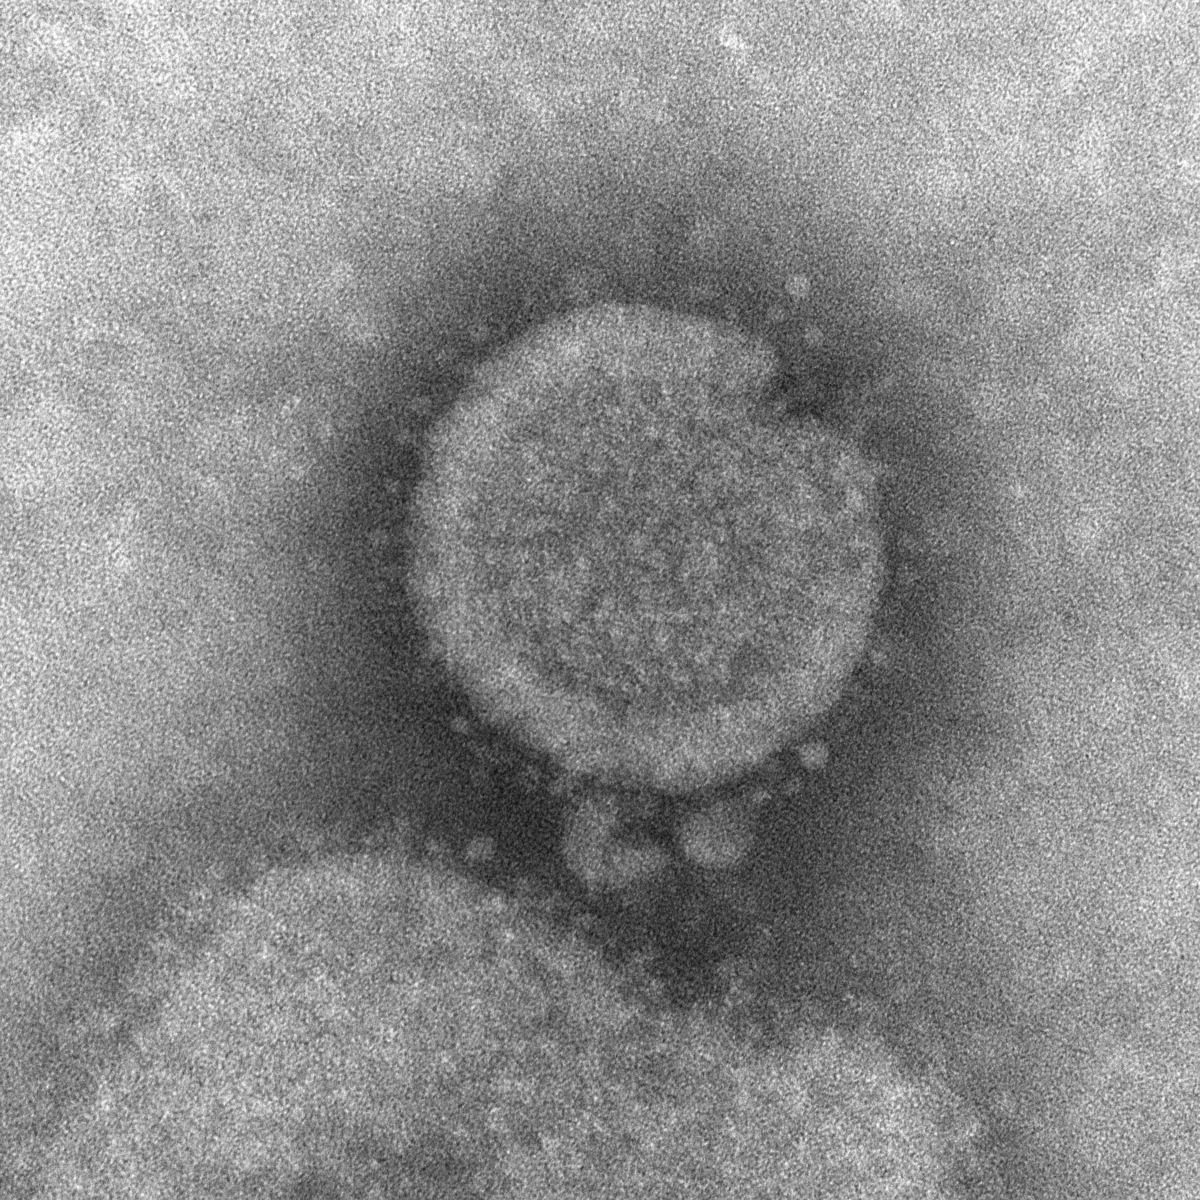 Influenza A H7N9